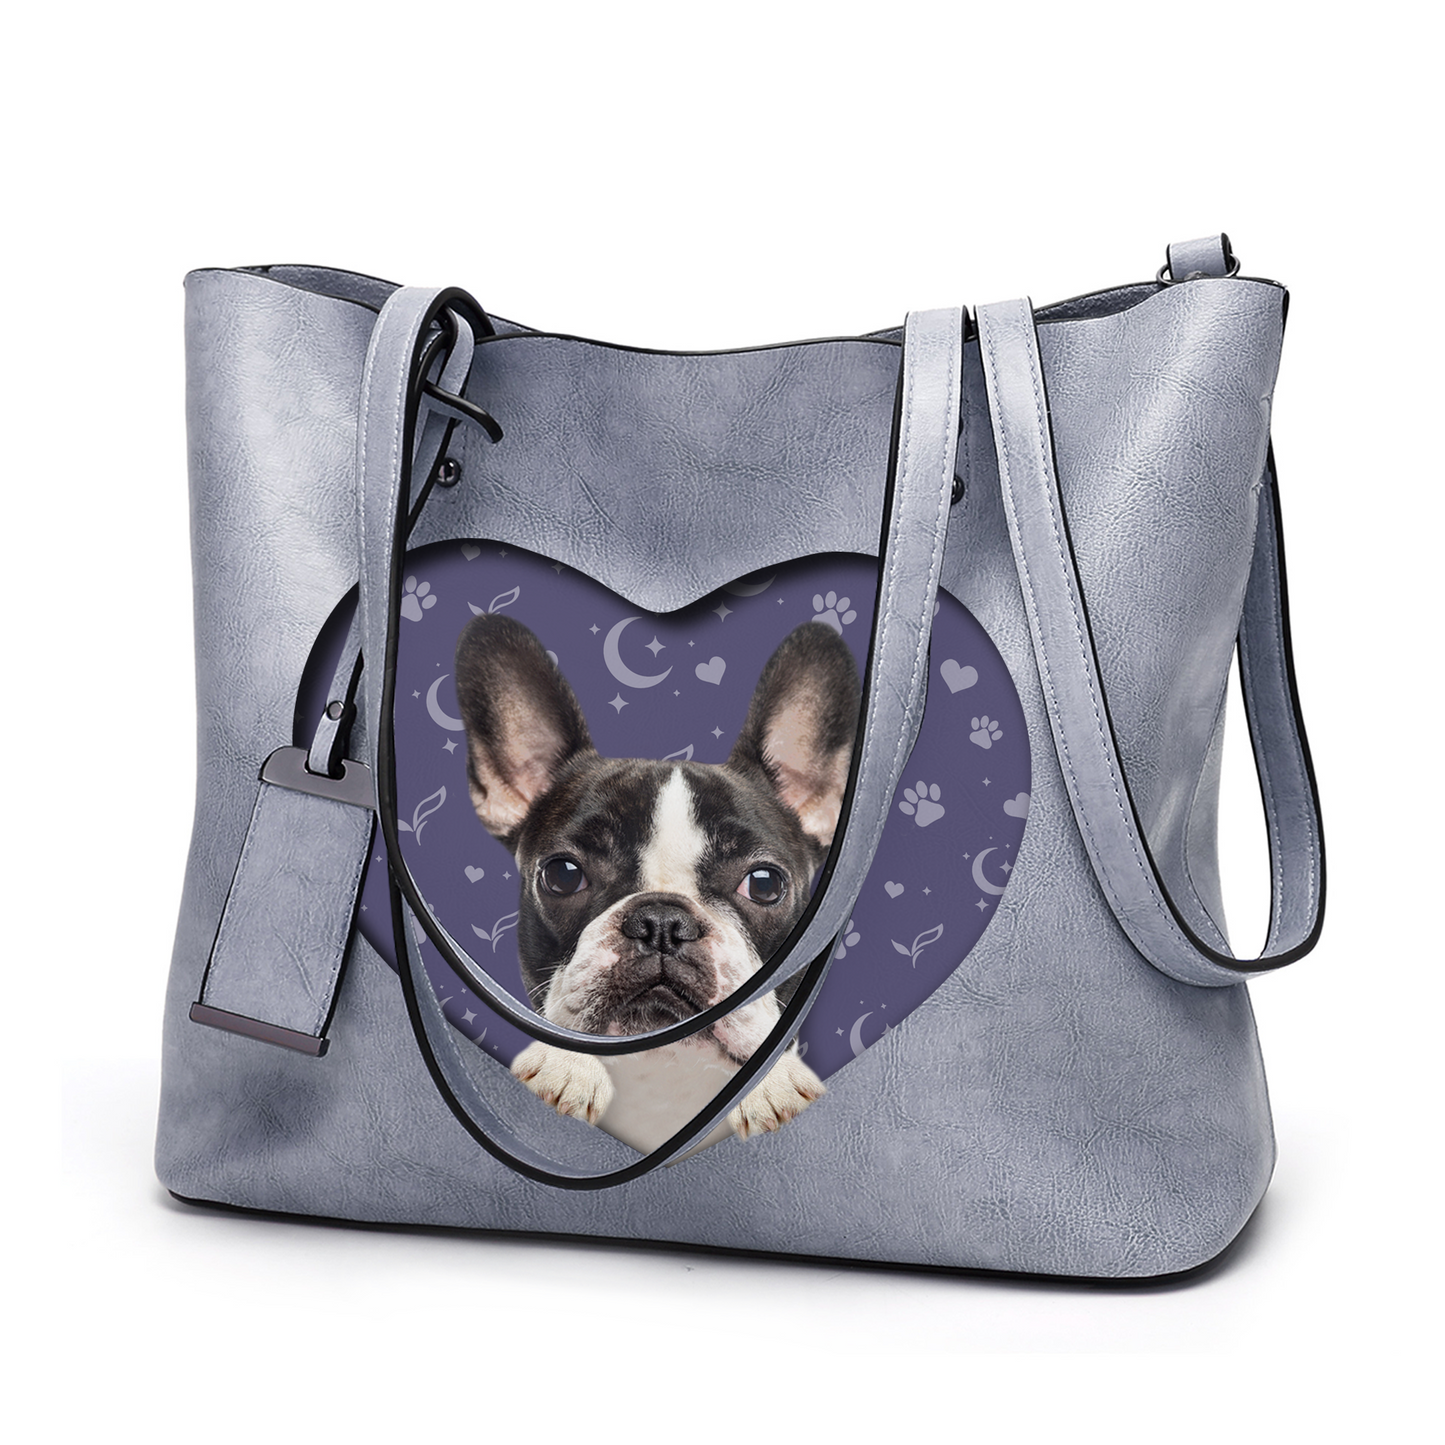 I Know I'm Cute - French Bulldog Glamour Handbag V3 - 9